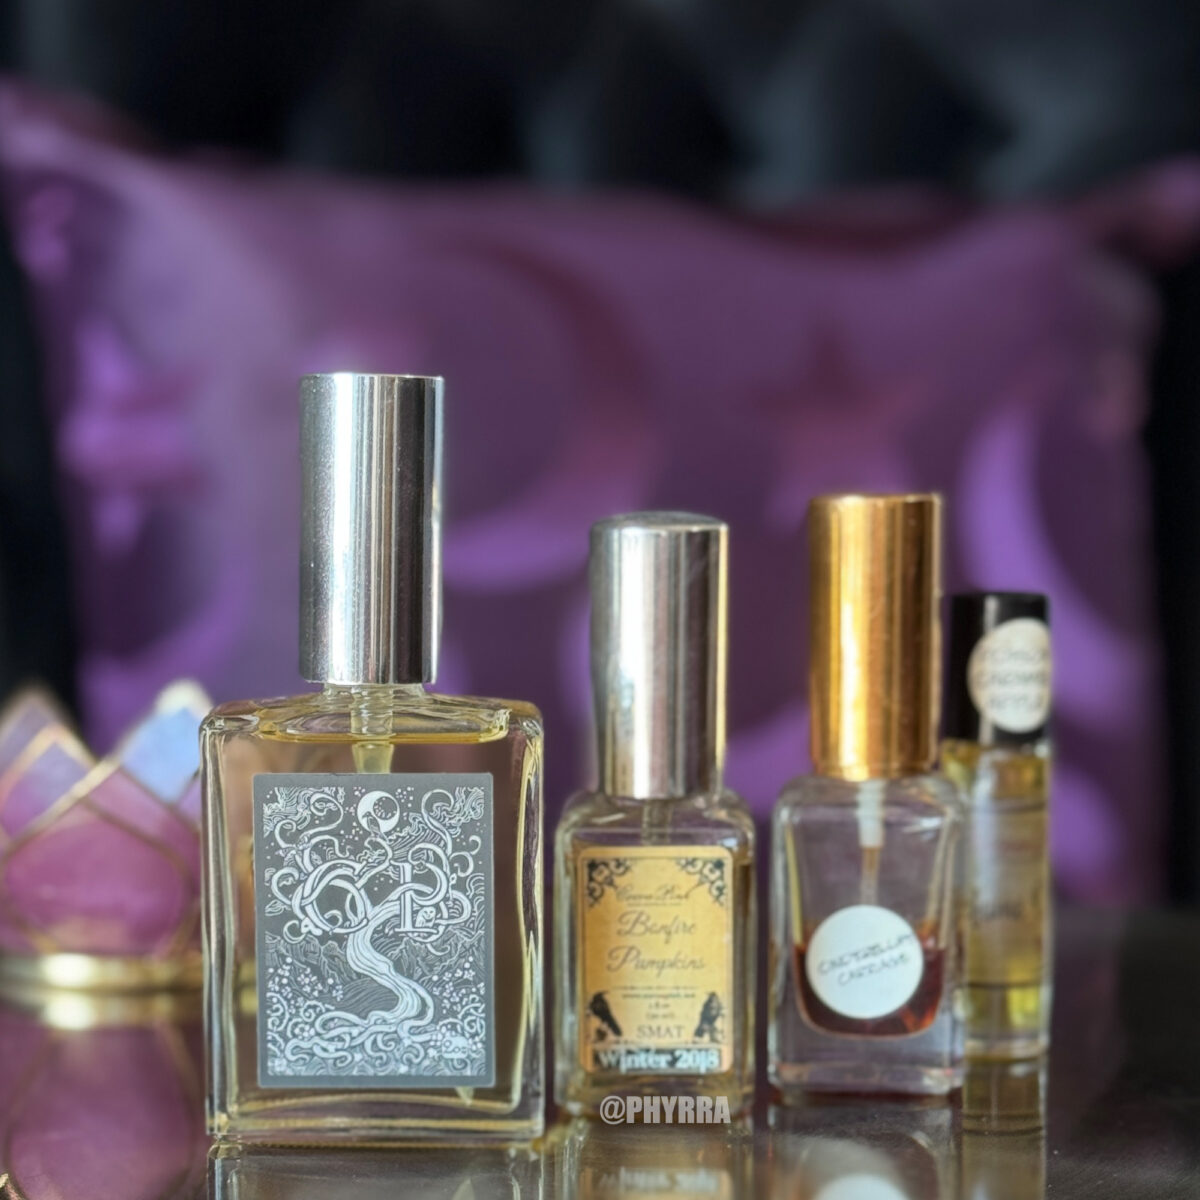 Mahogany Teakwood Cologne  Small Batch Artisan Perfumery by